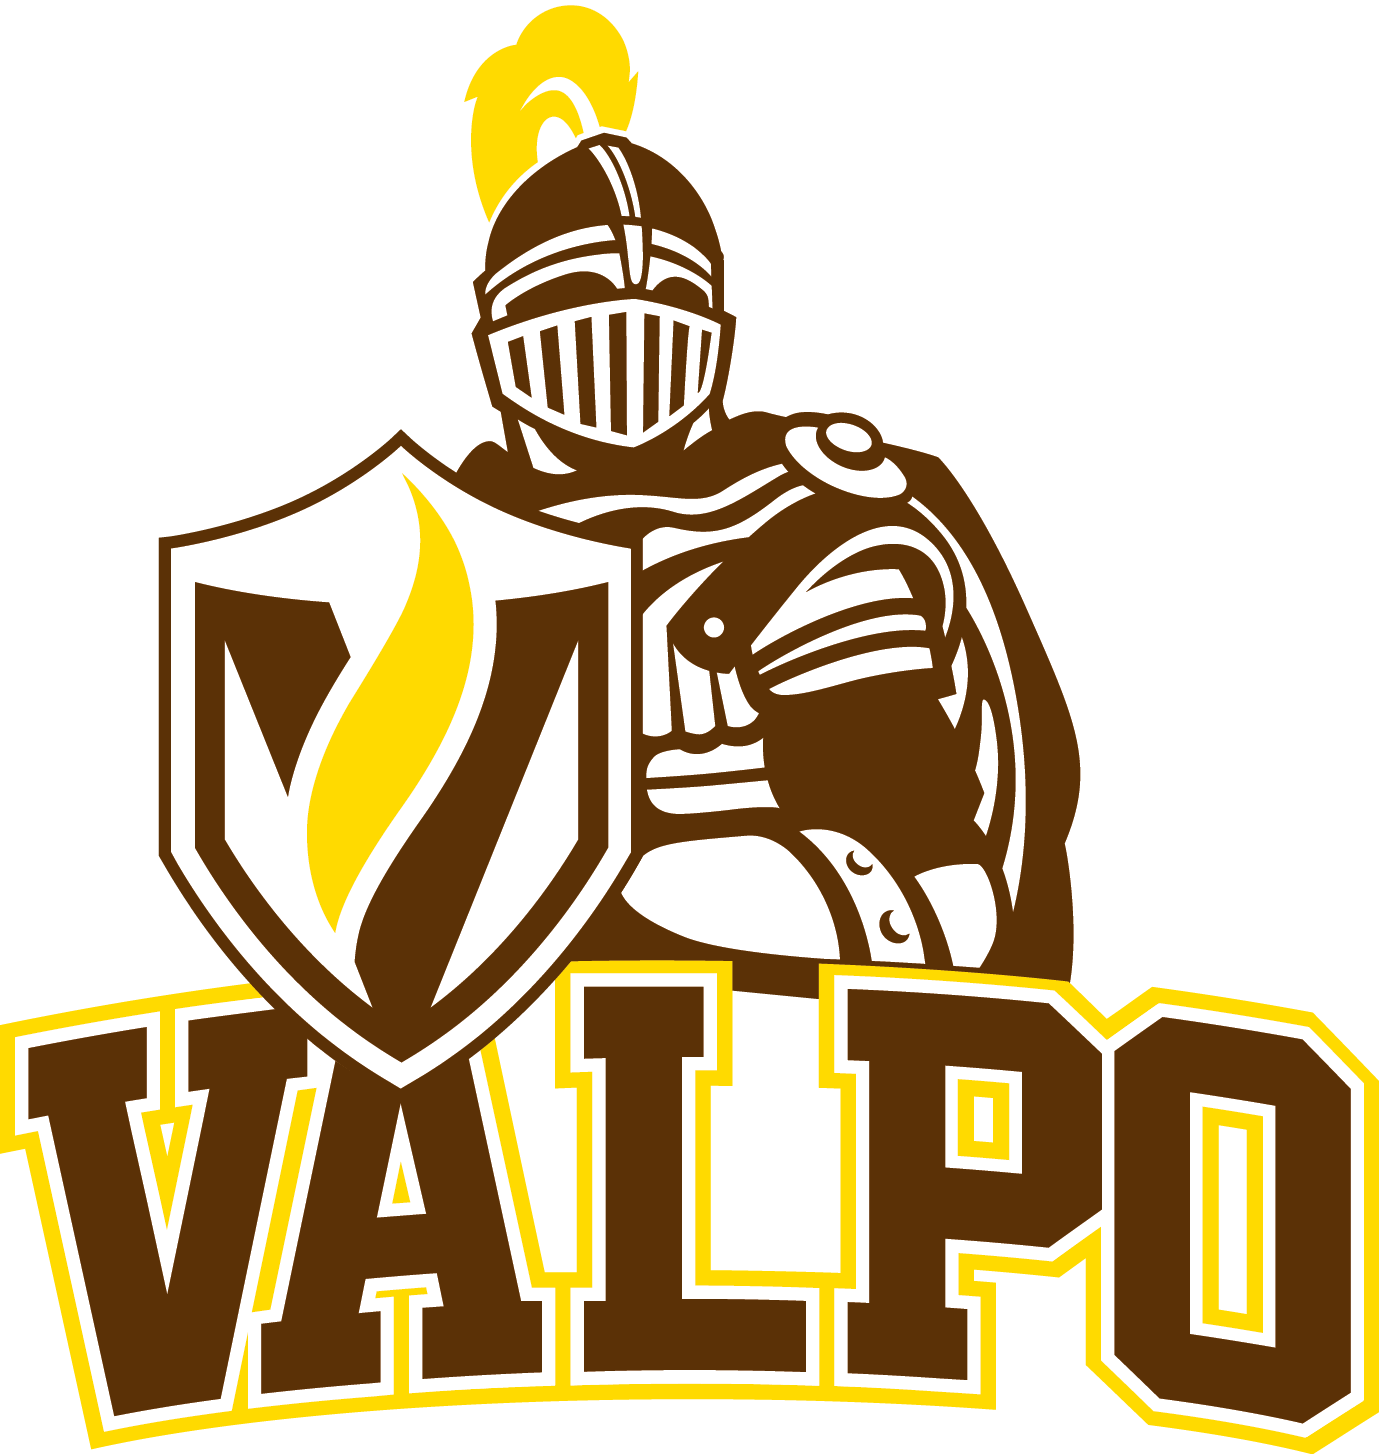 Athletic Valpo Crusader logo, logotype